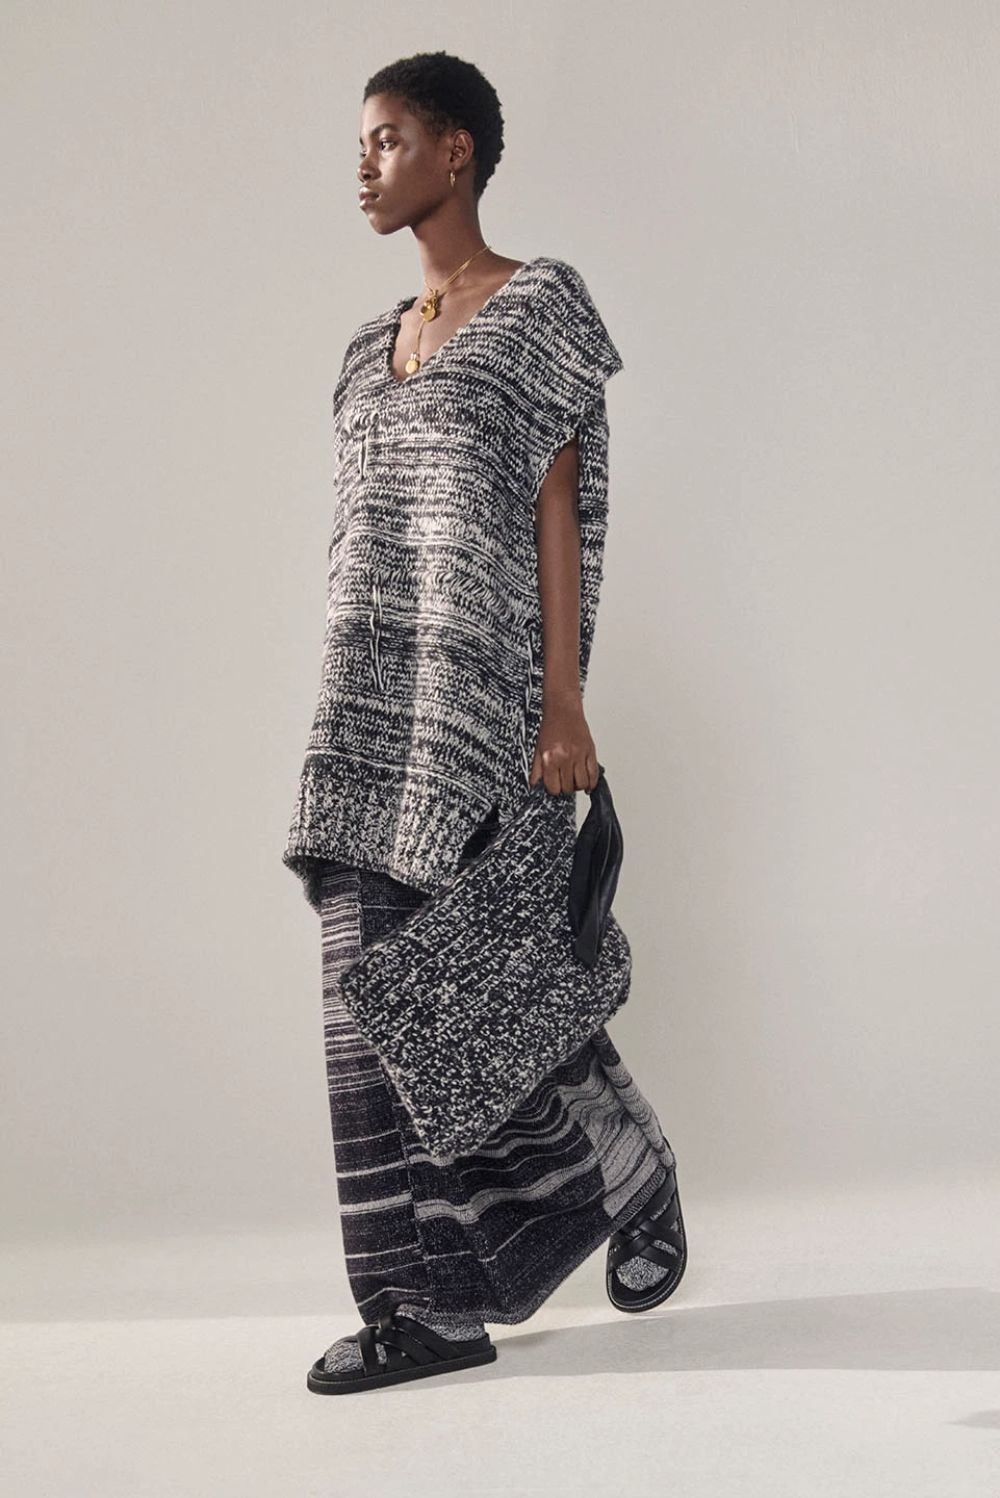 Joseph Texture Knit Poncho / Graphic Knit Skirt / Leather Jamila Sandals / Texture Knit Clutch Bag